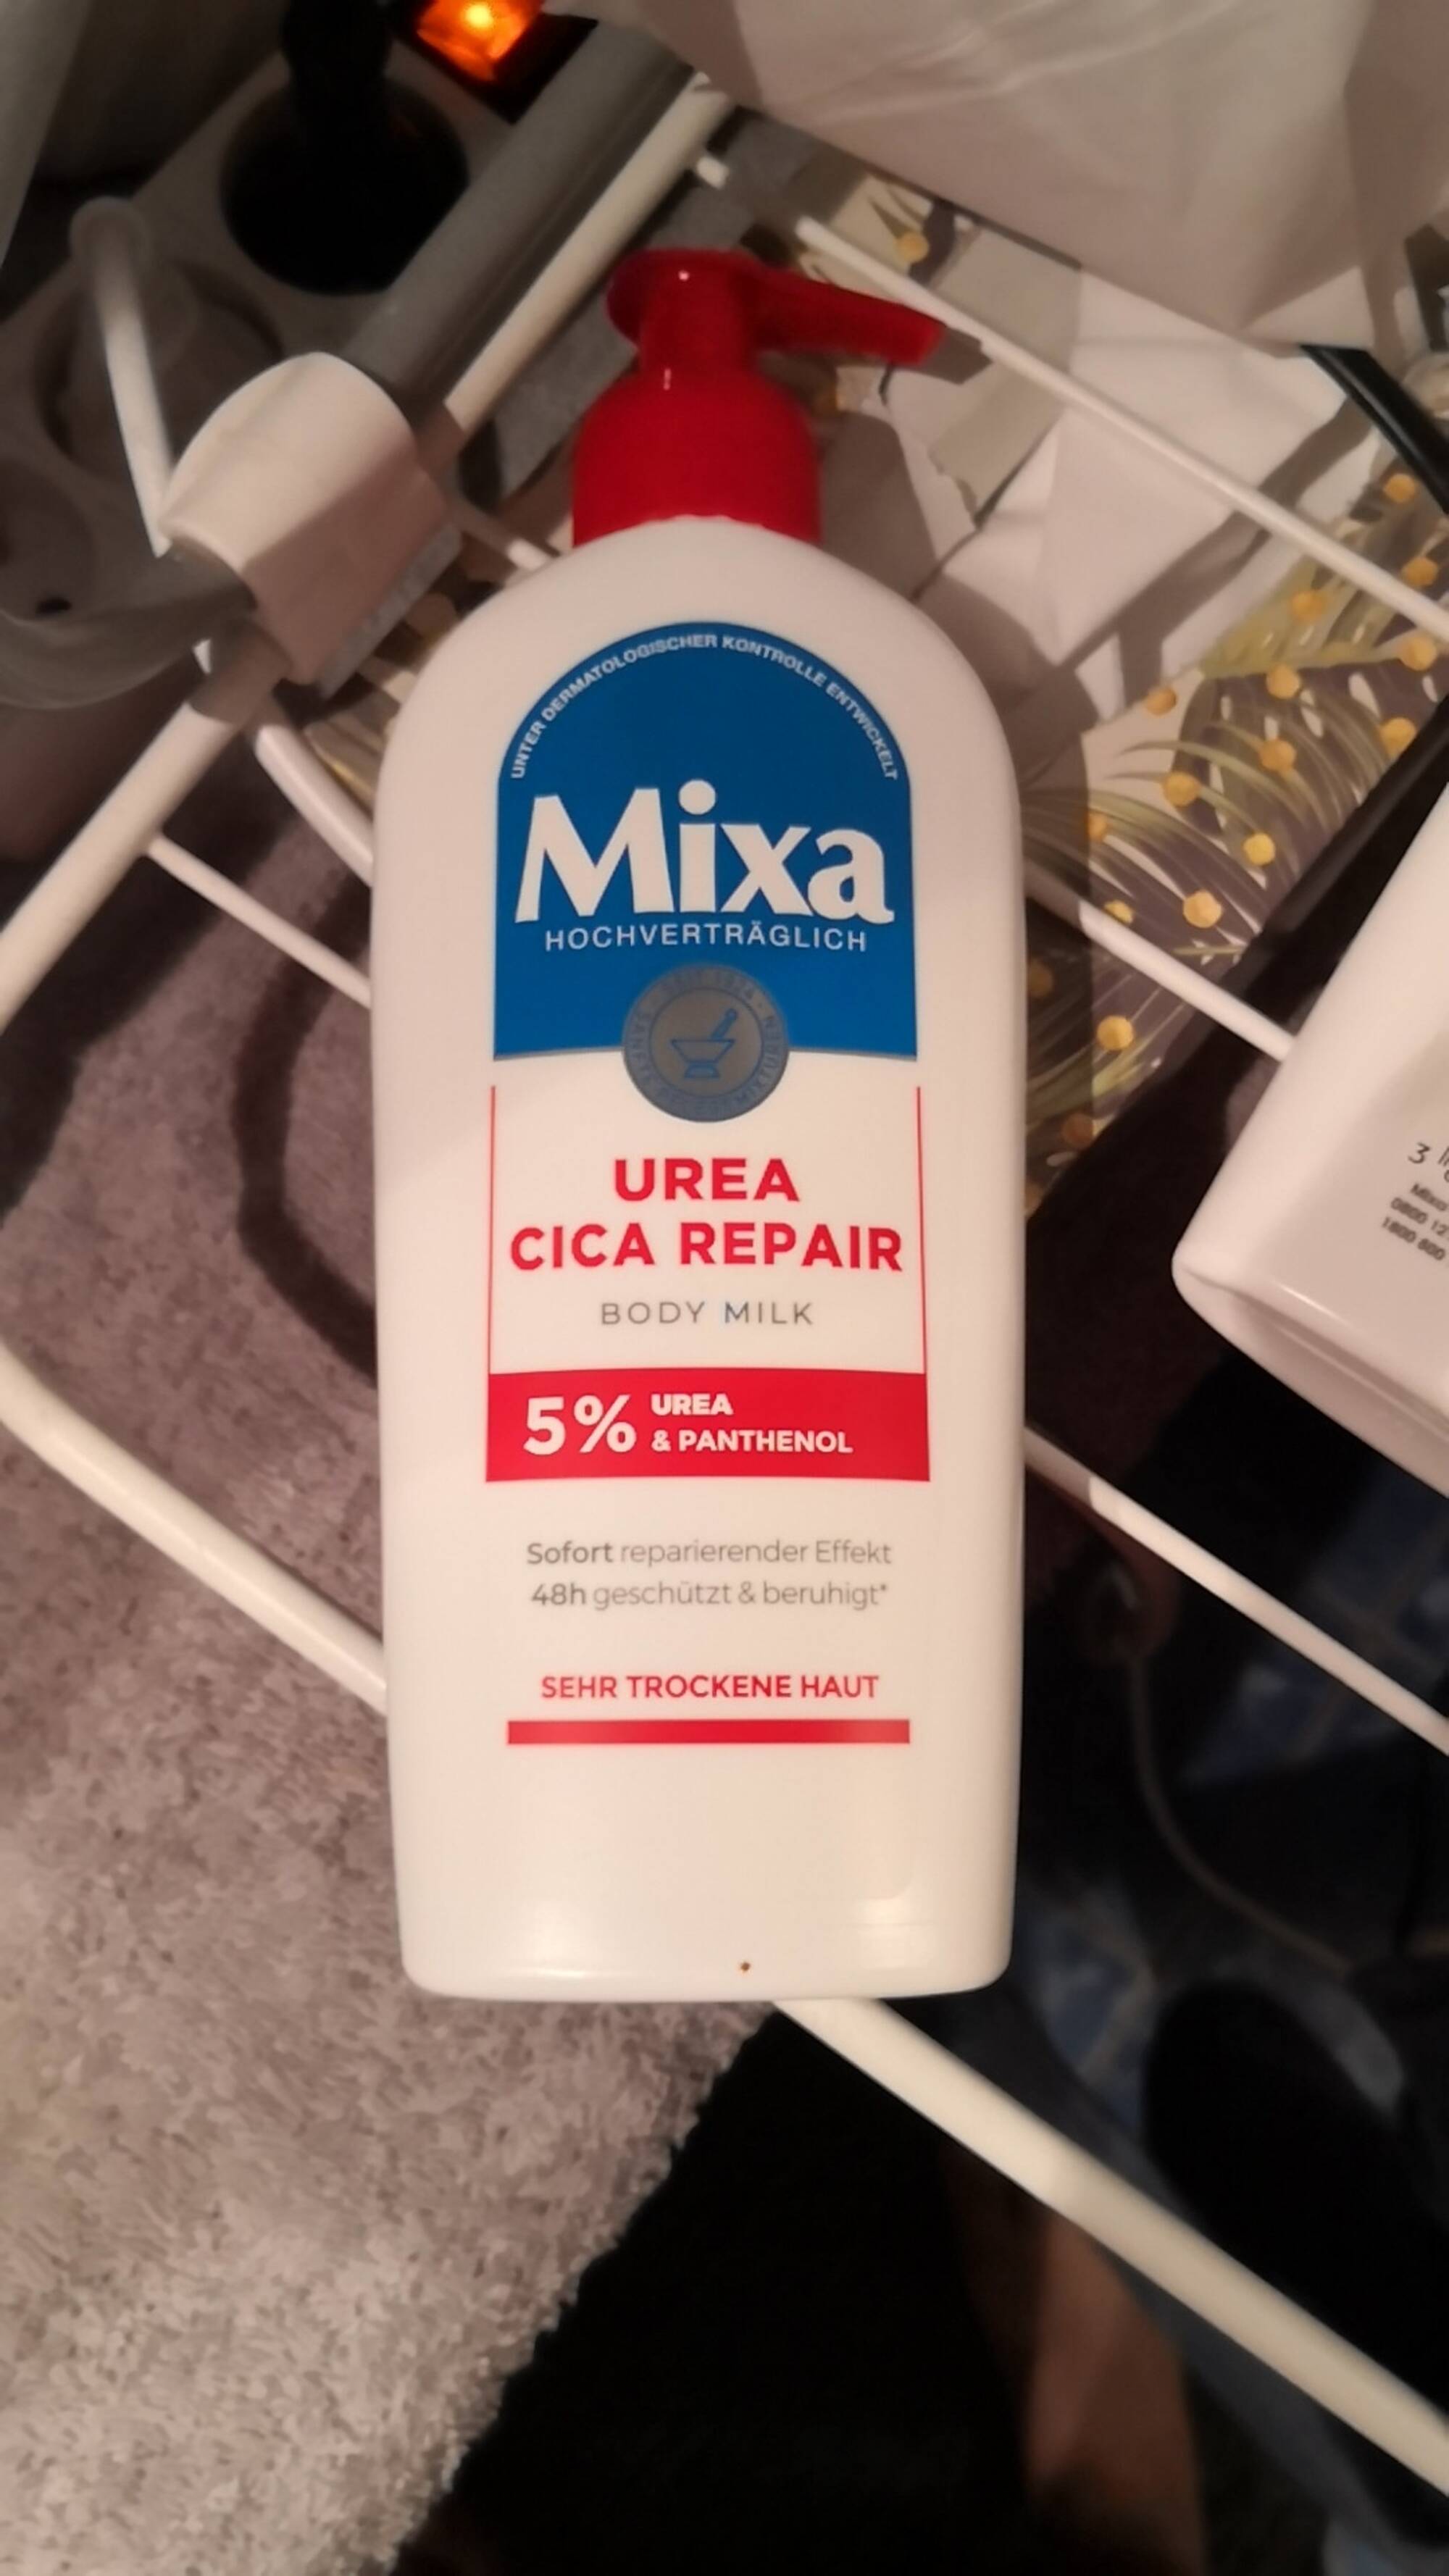 MIXA - Urea cica repair - Body milk